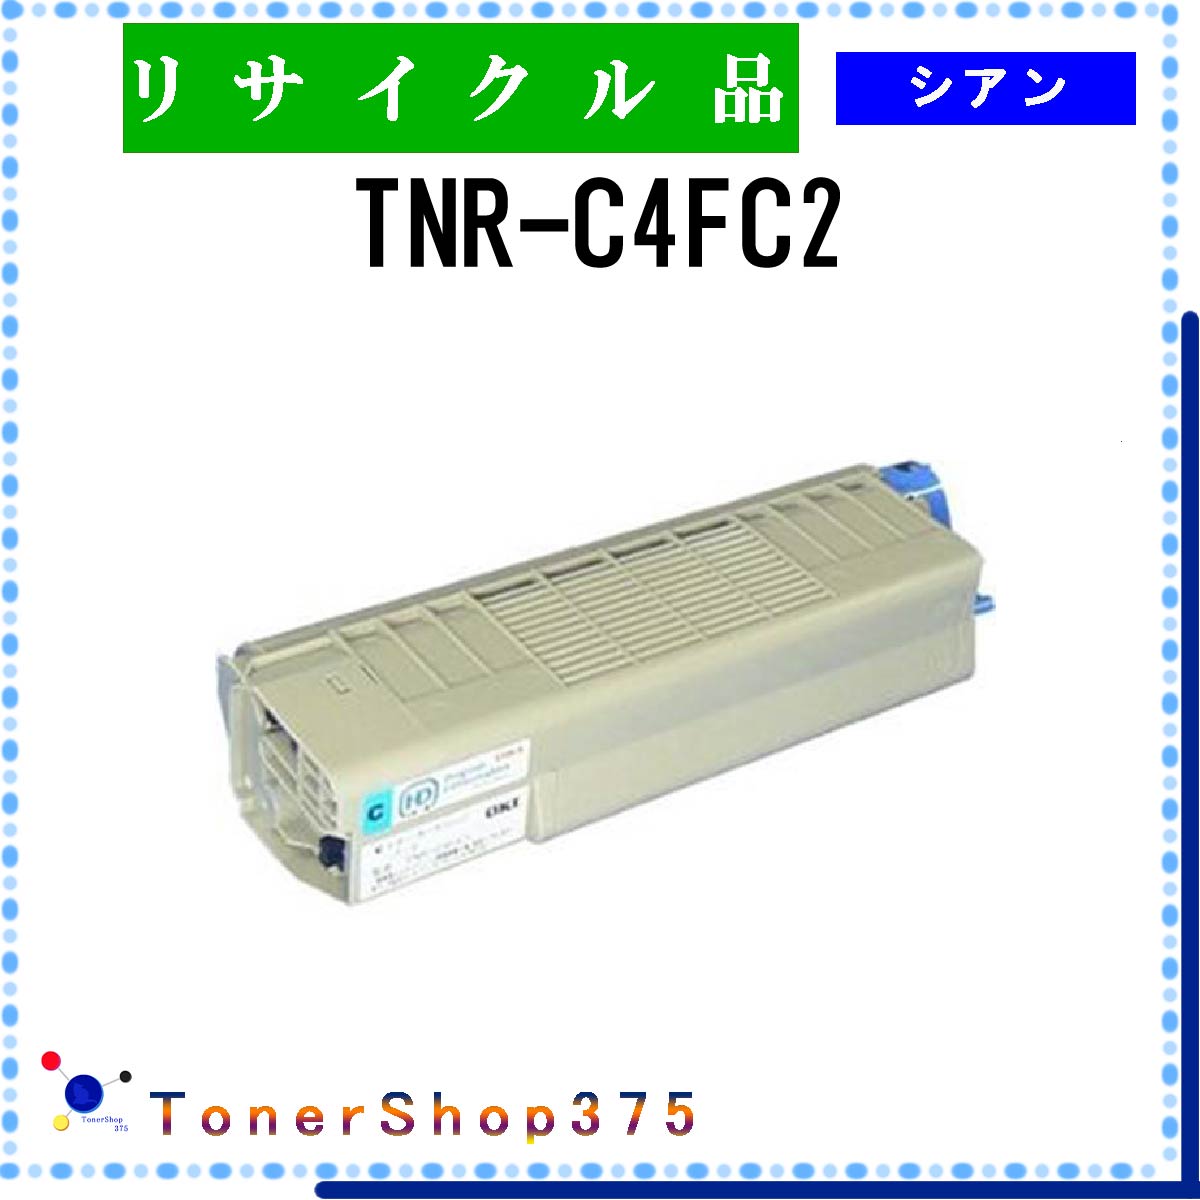 OKI y TNR-C4FC2 z VA TCN gi[ TCNHƉFH蒼 STMCF ݌ɕi 